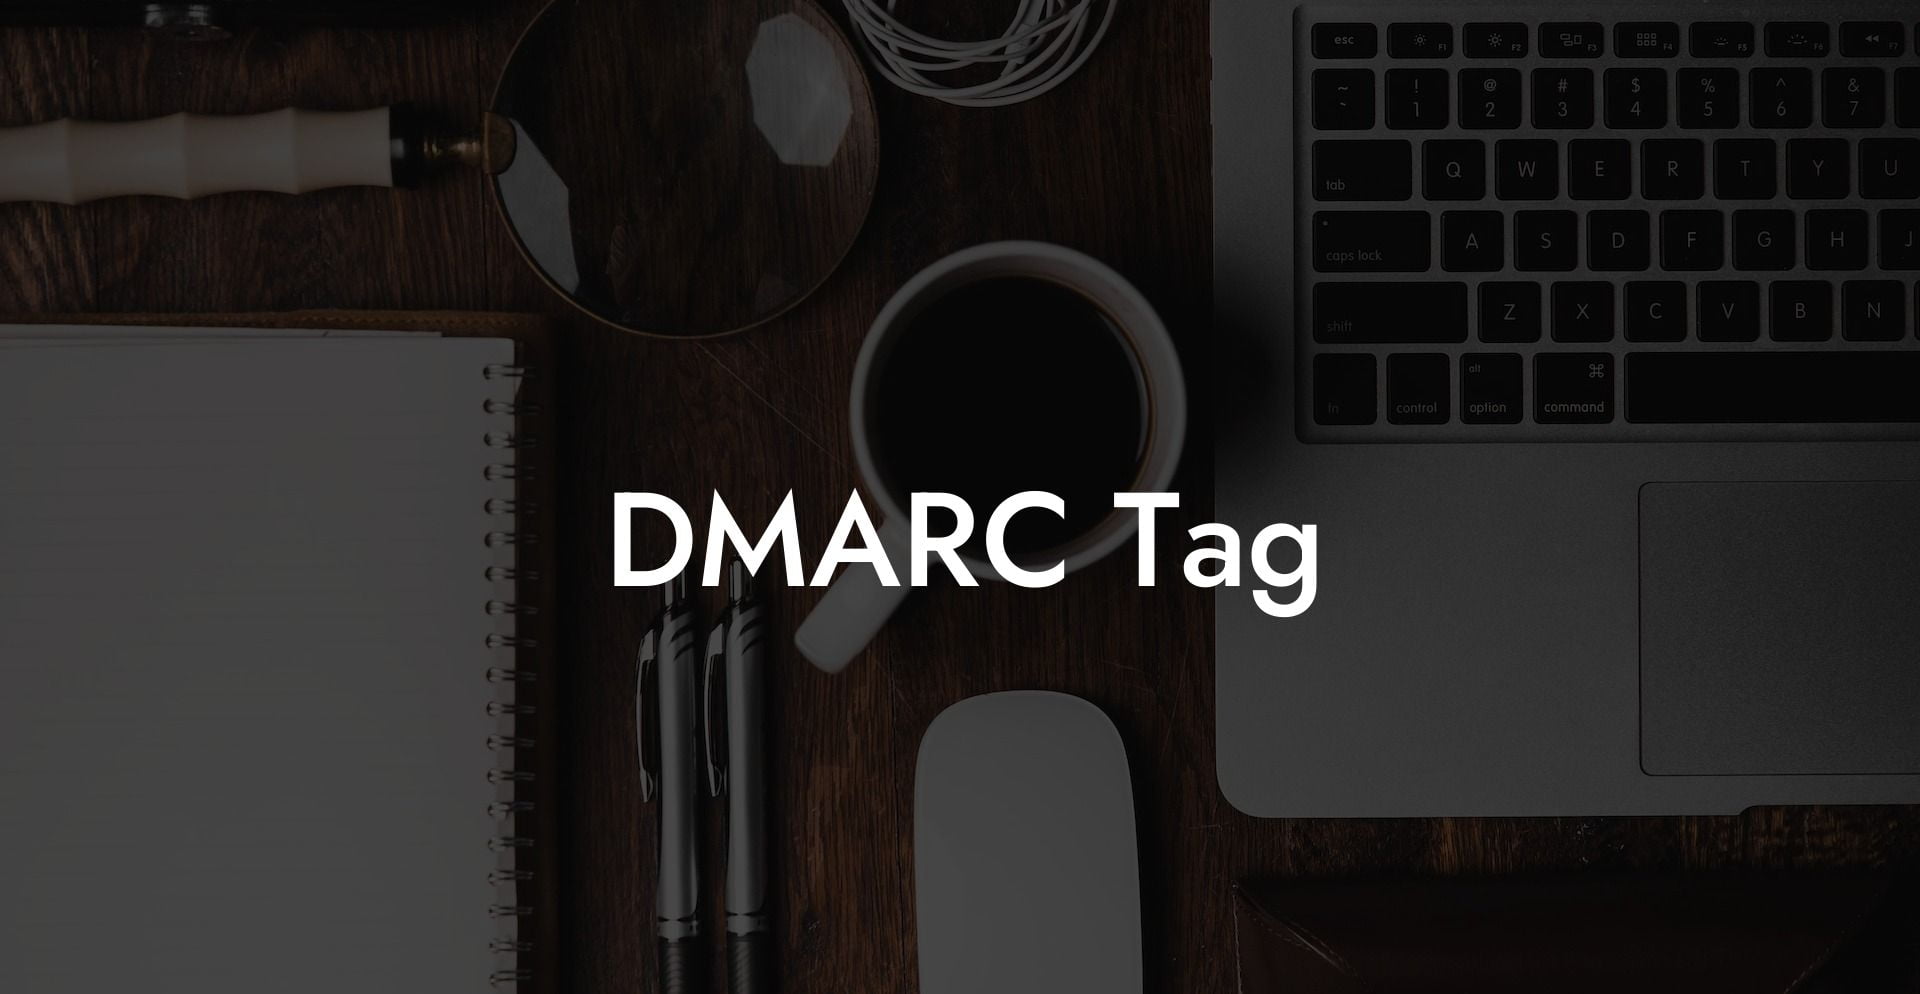 DMARC Tag